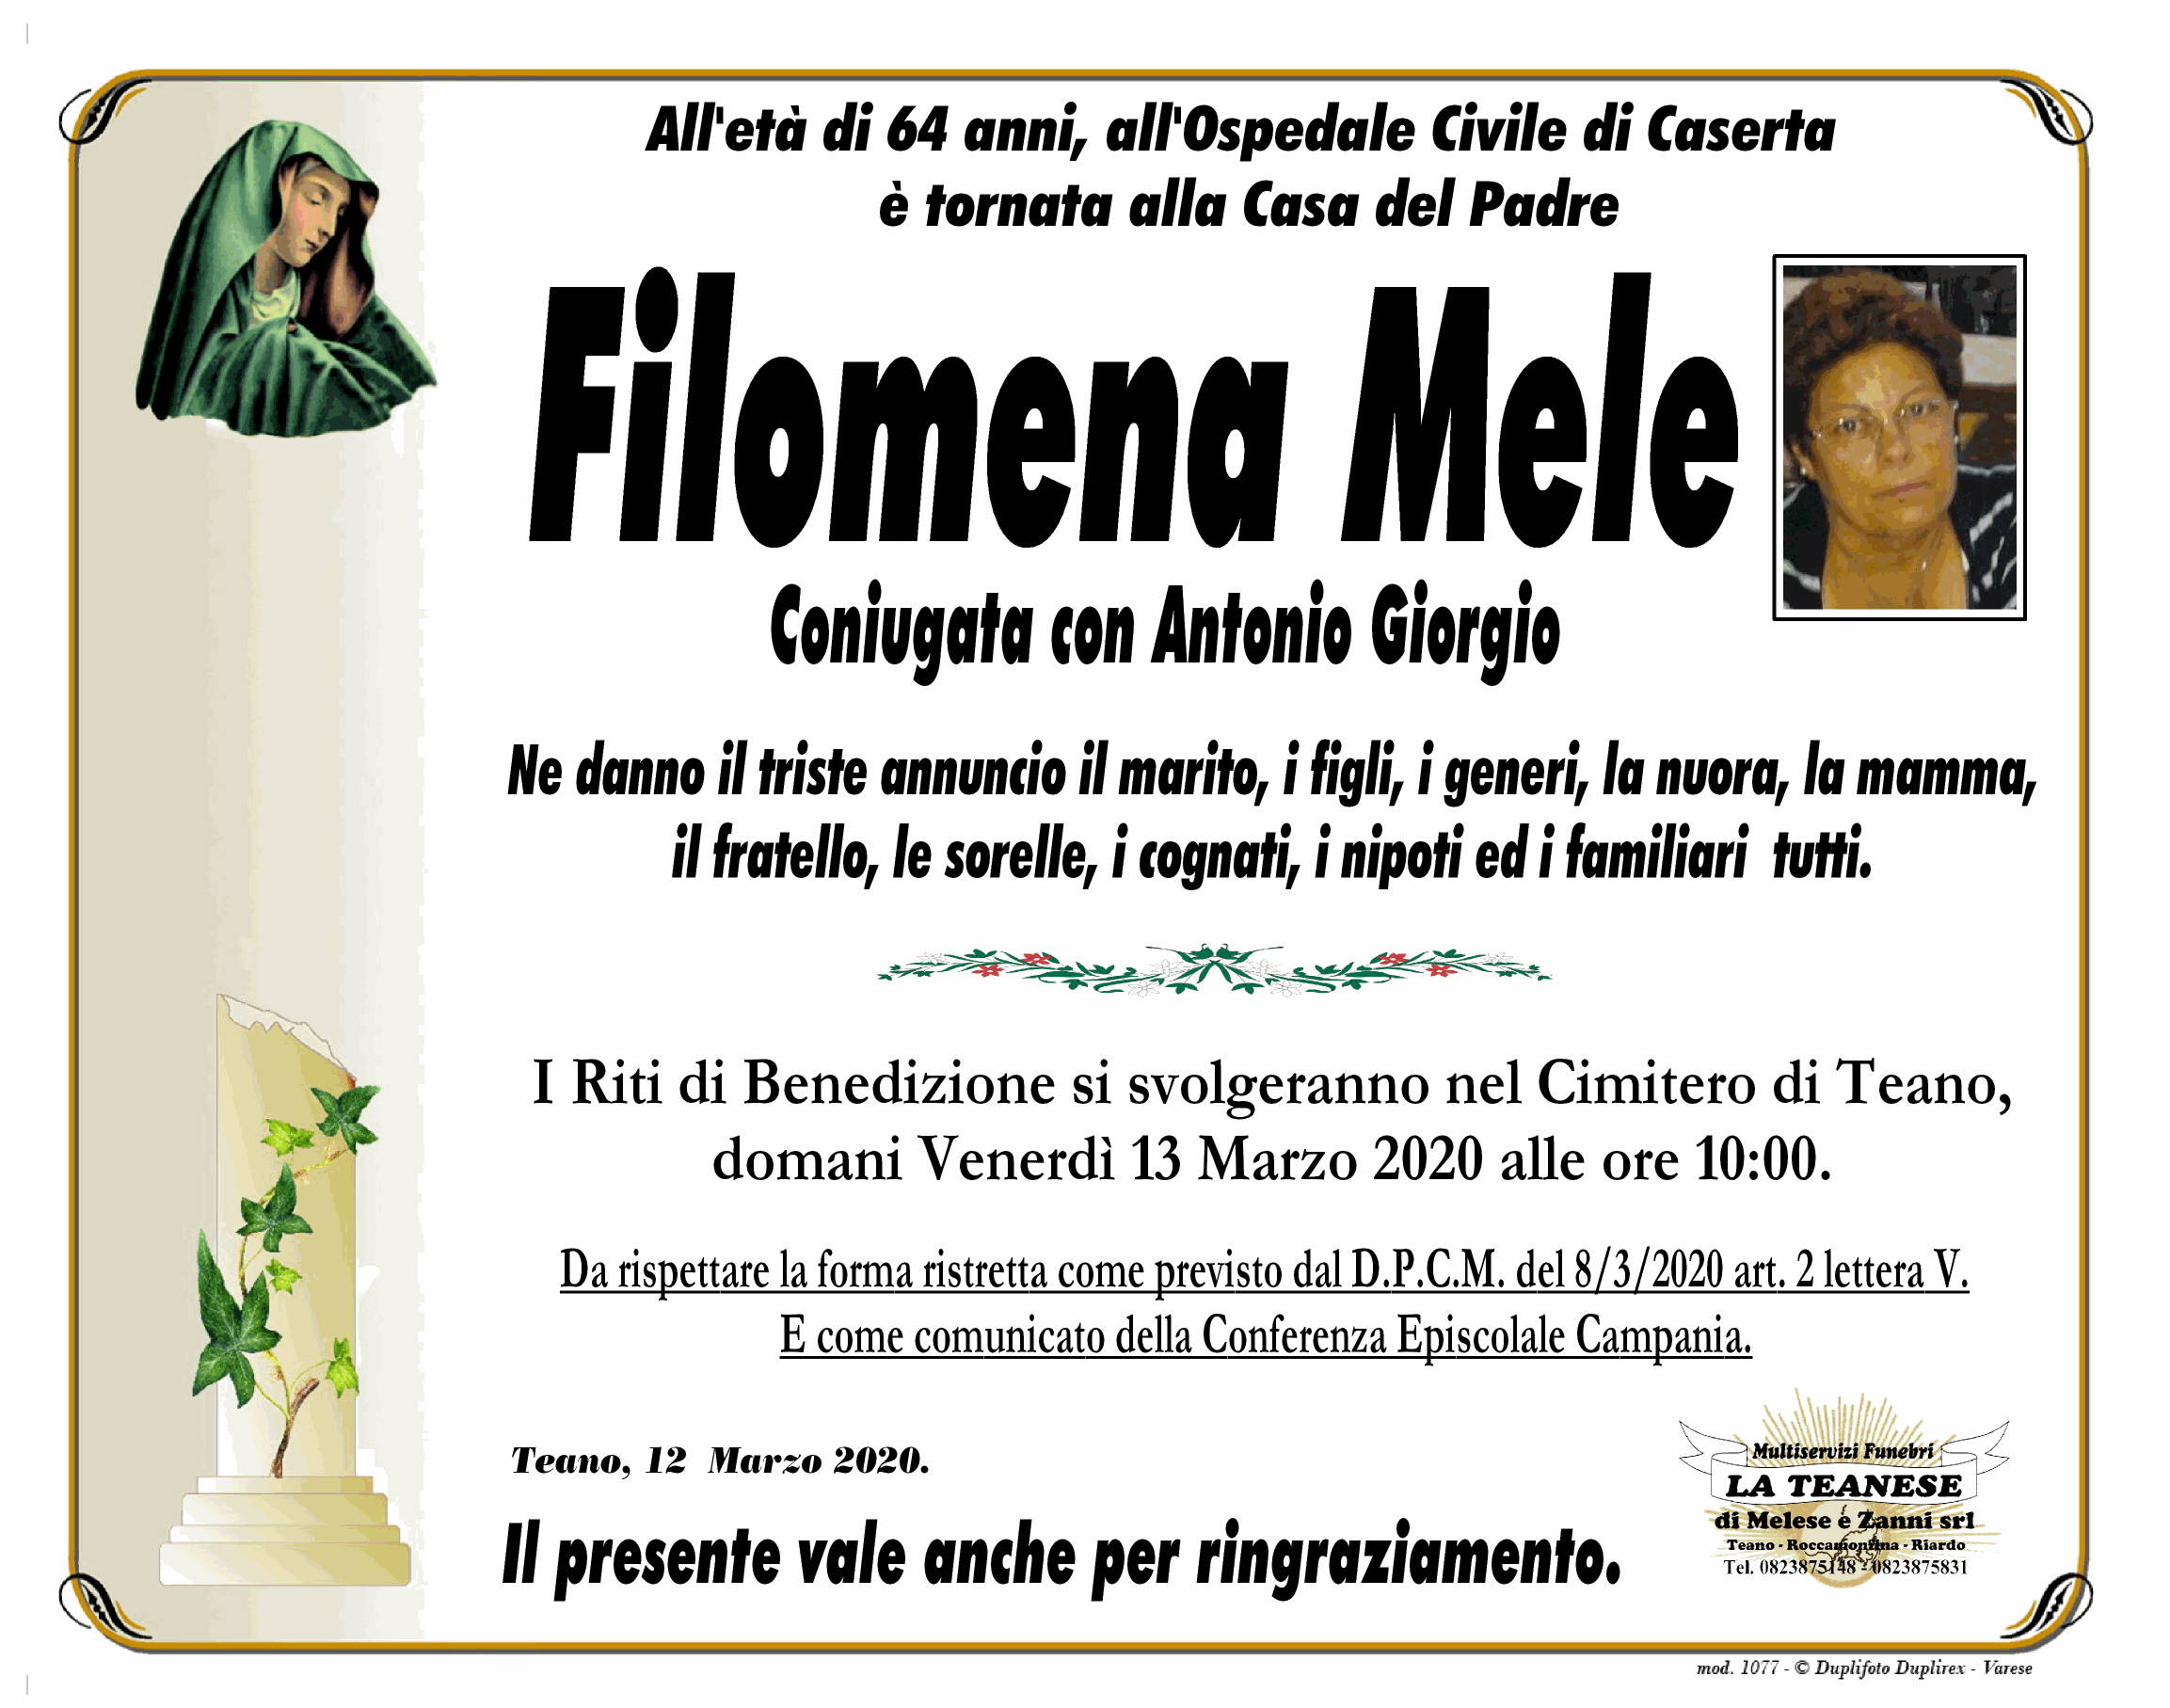 Filomena Mele